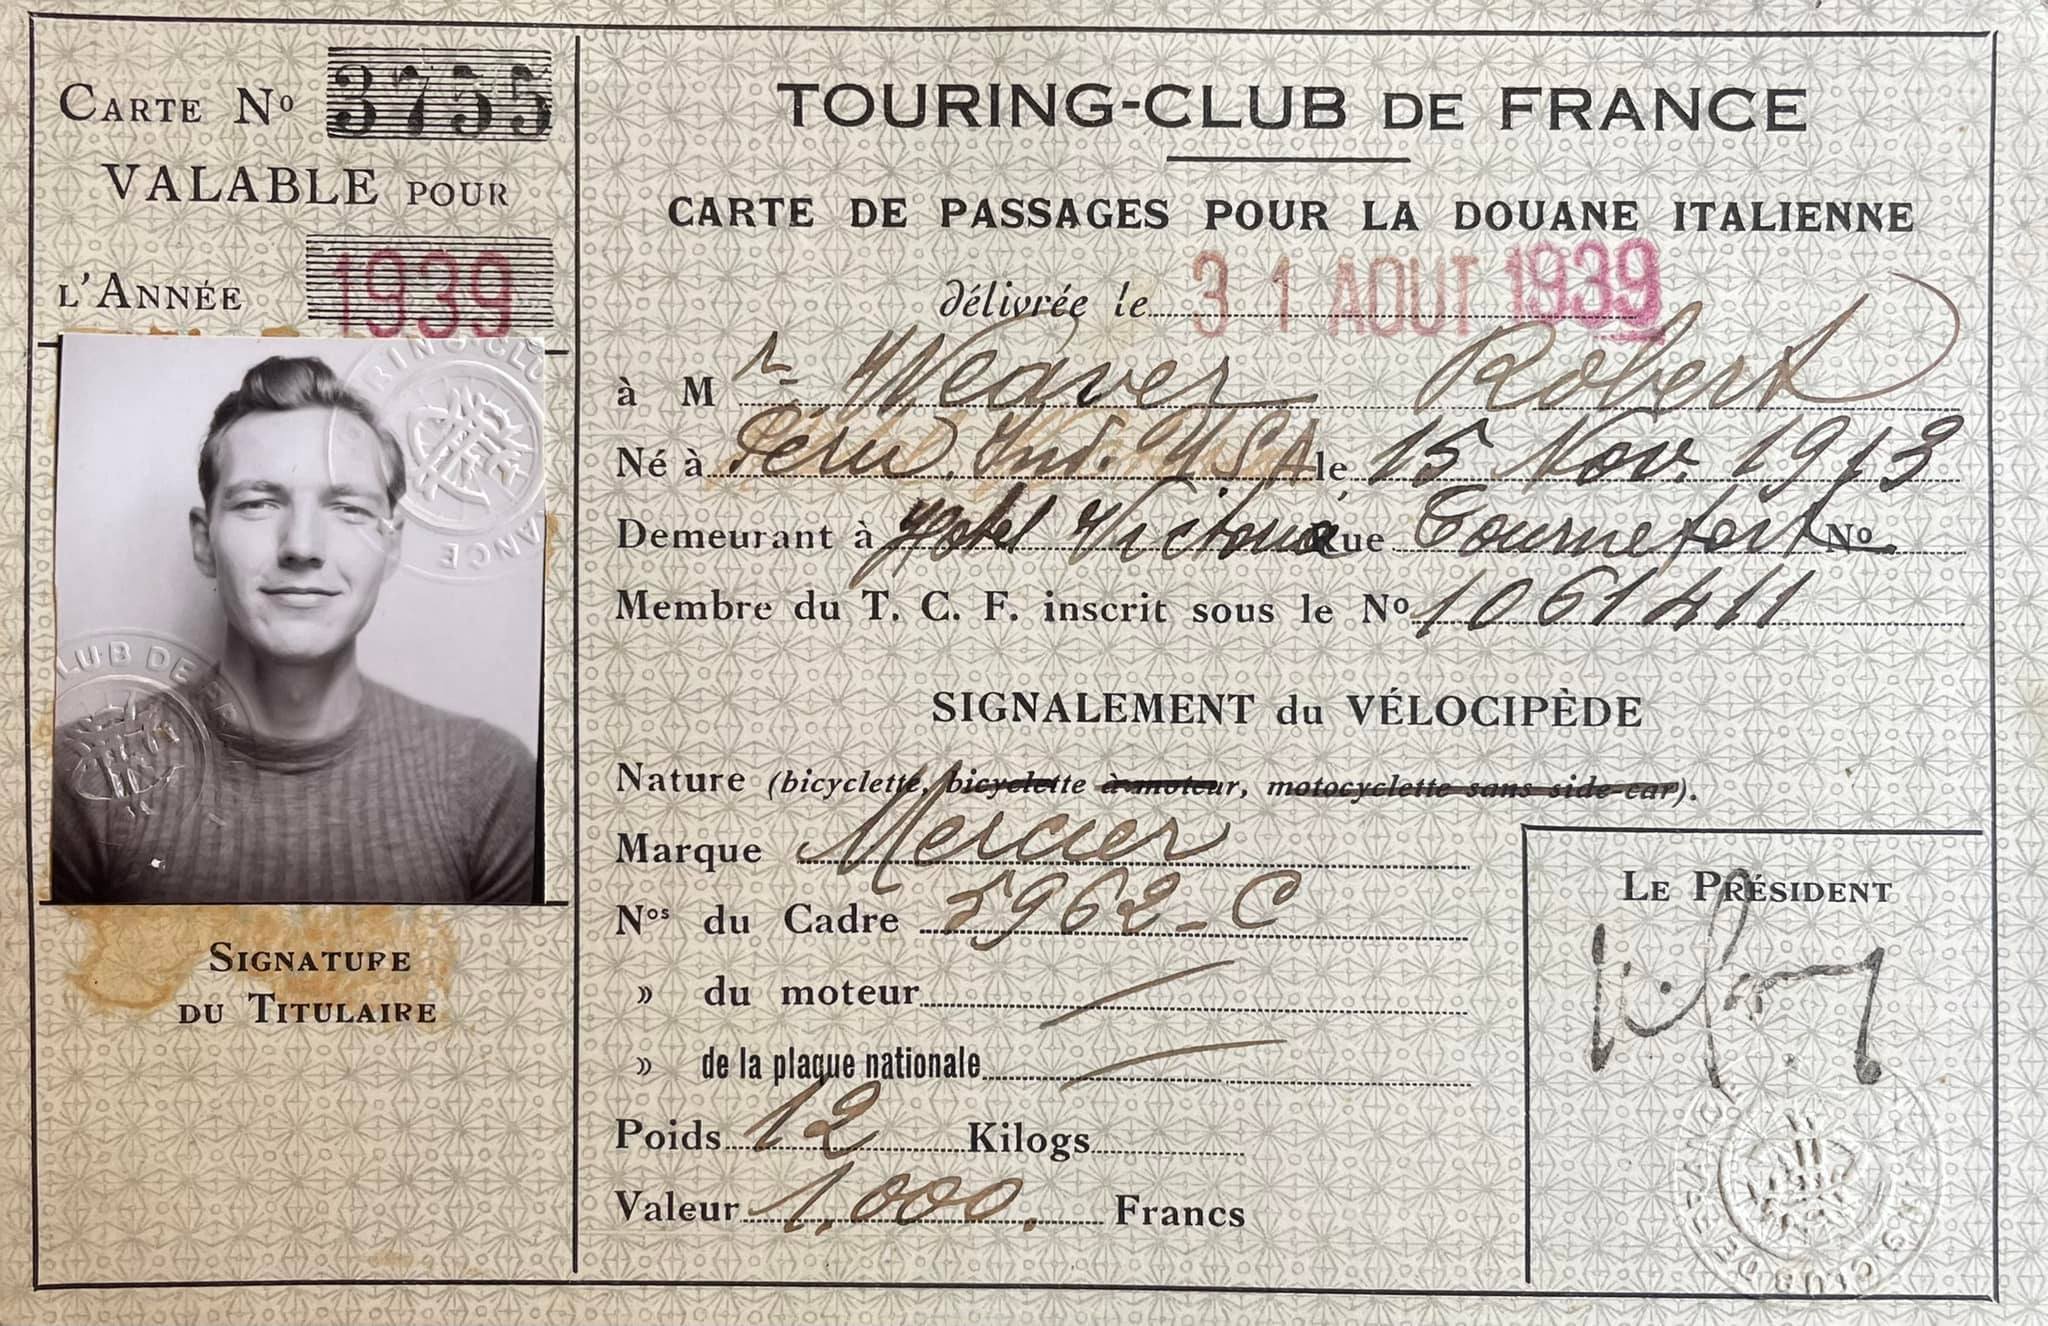 REW French Bicycle Club Card, 1939